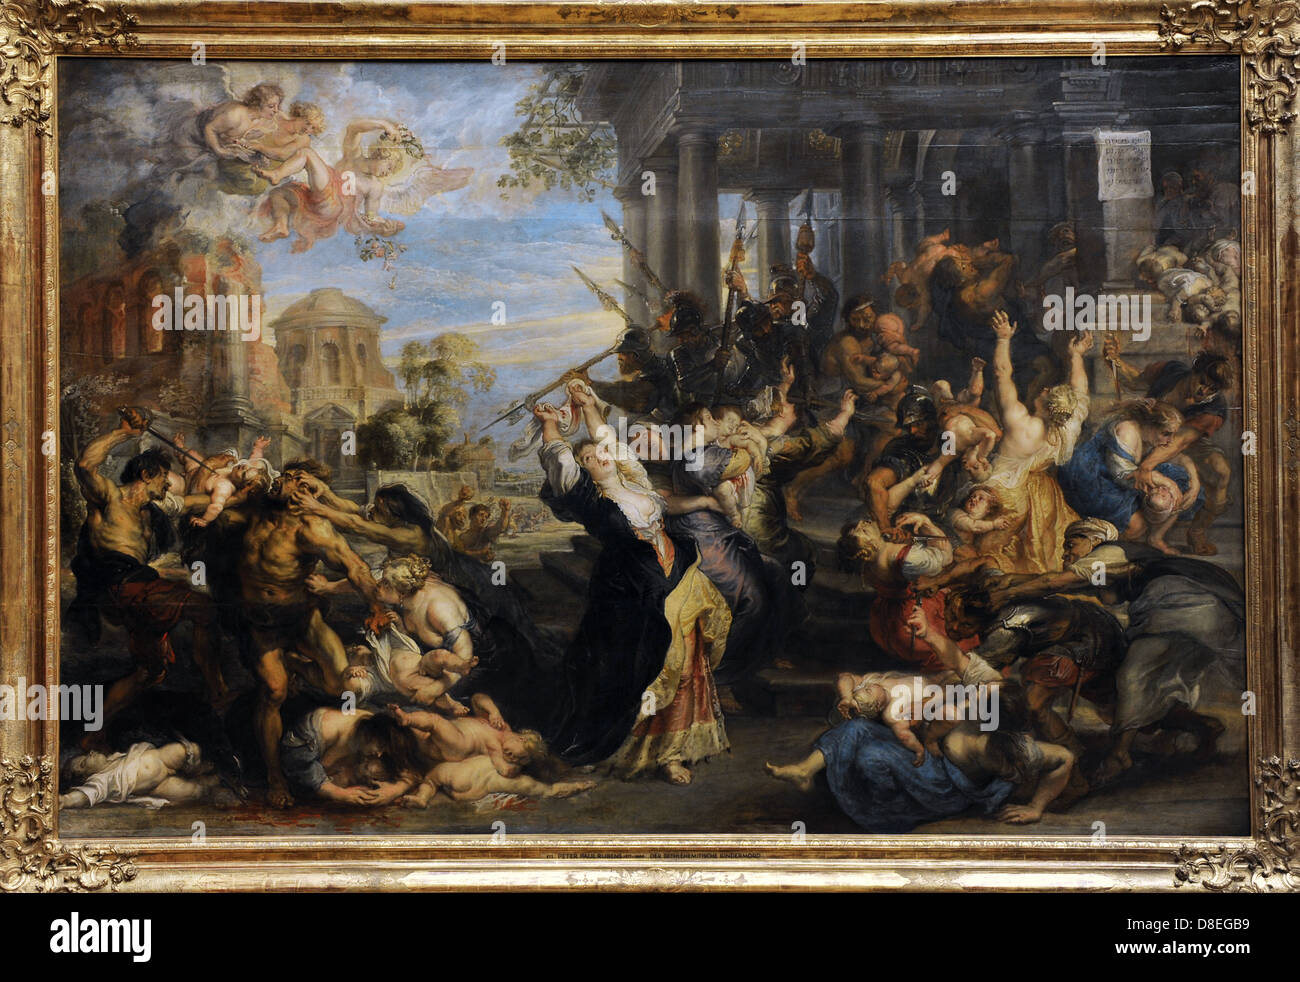 Peter Paul Rubens (1577-1640). L'allemand peintre baroque flamand. Massacre des Innocents, 1635-40. Banque D'Images